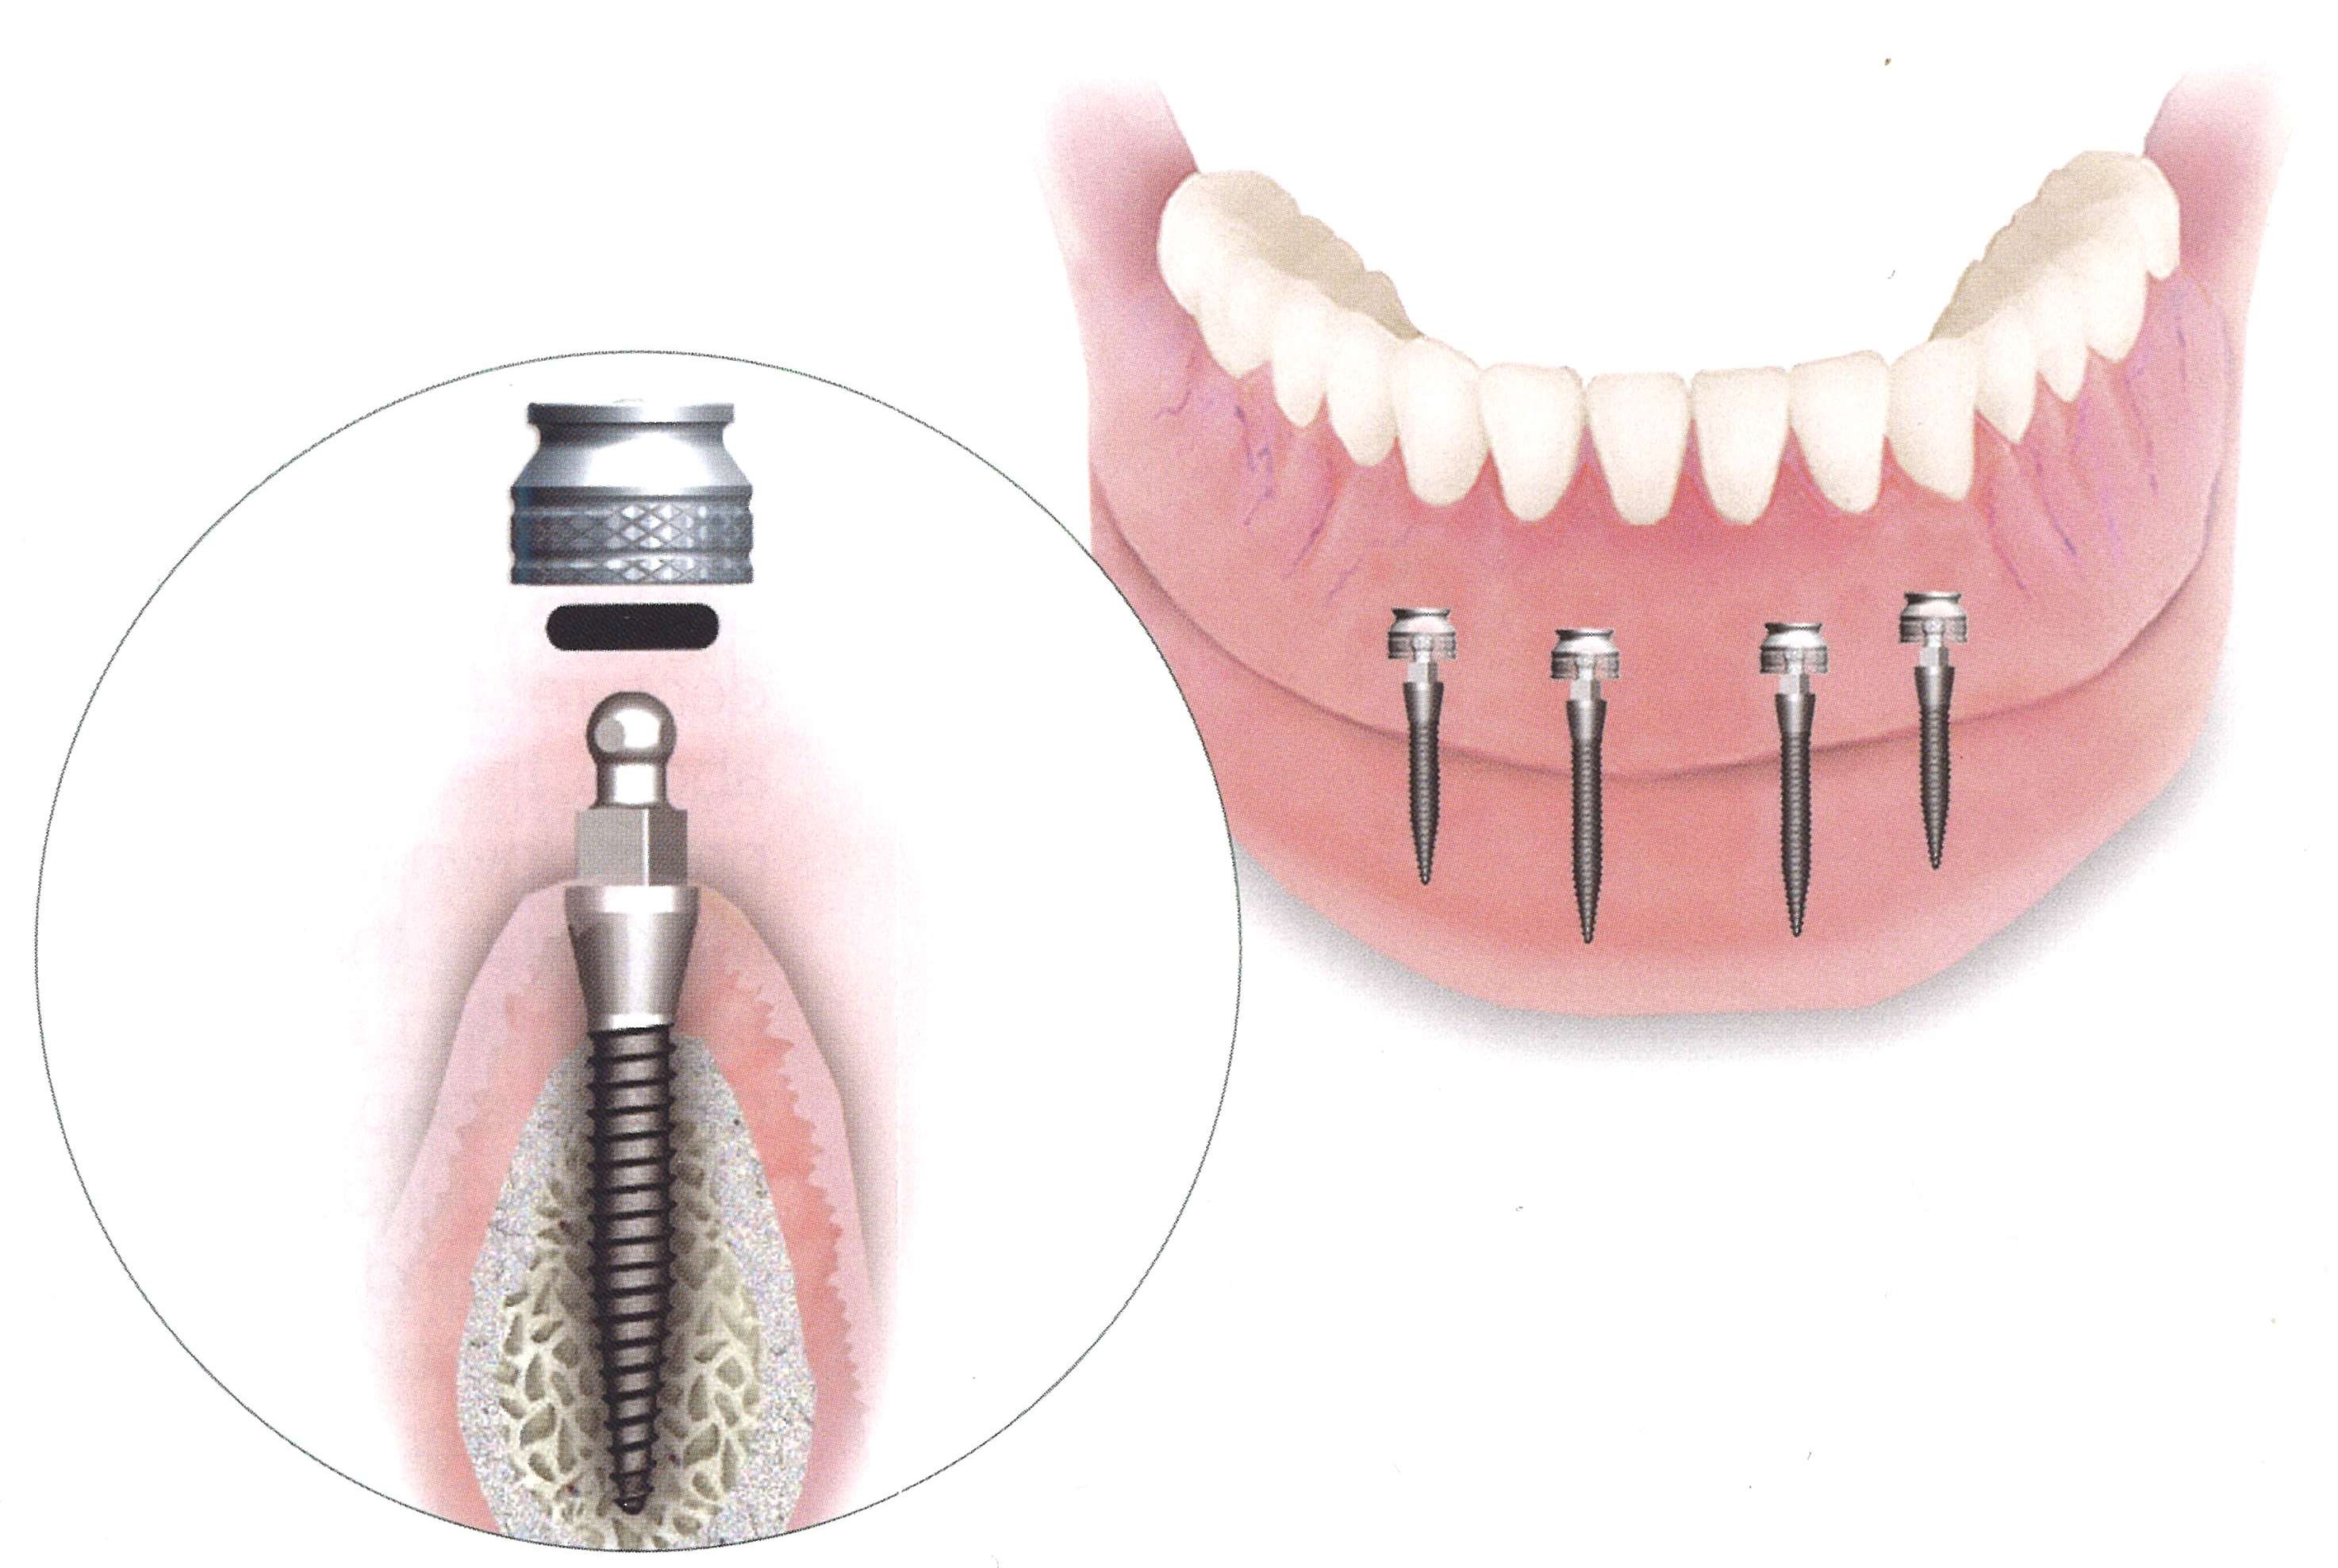 Mini Dental Implants | Top implant doctor in Houston, TX